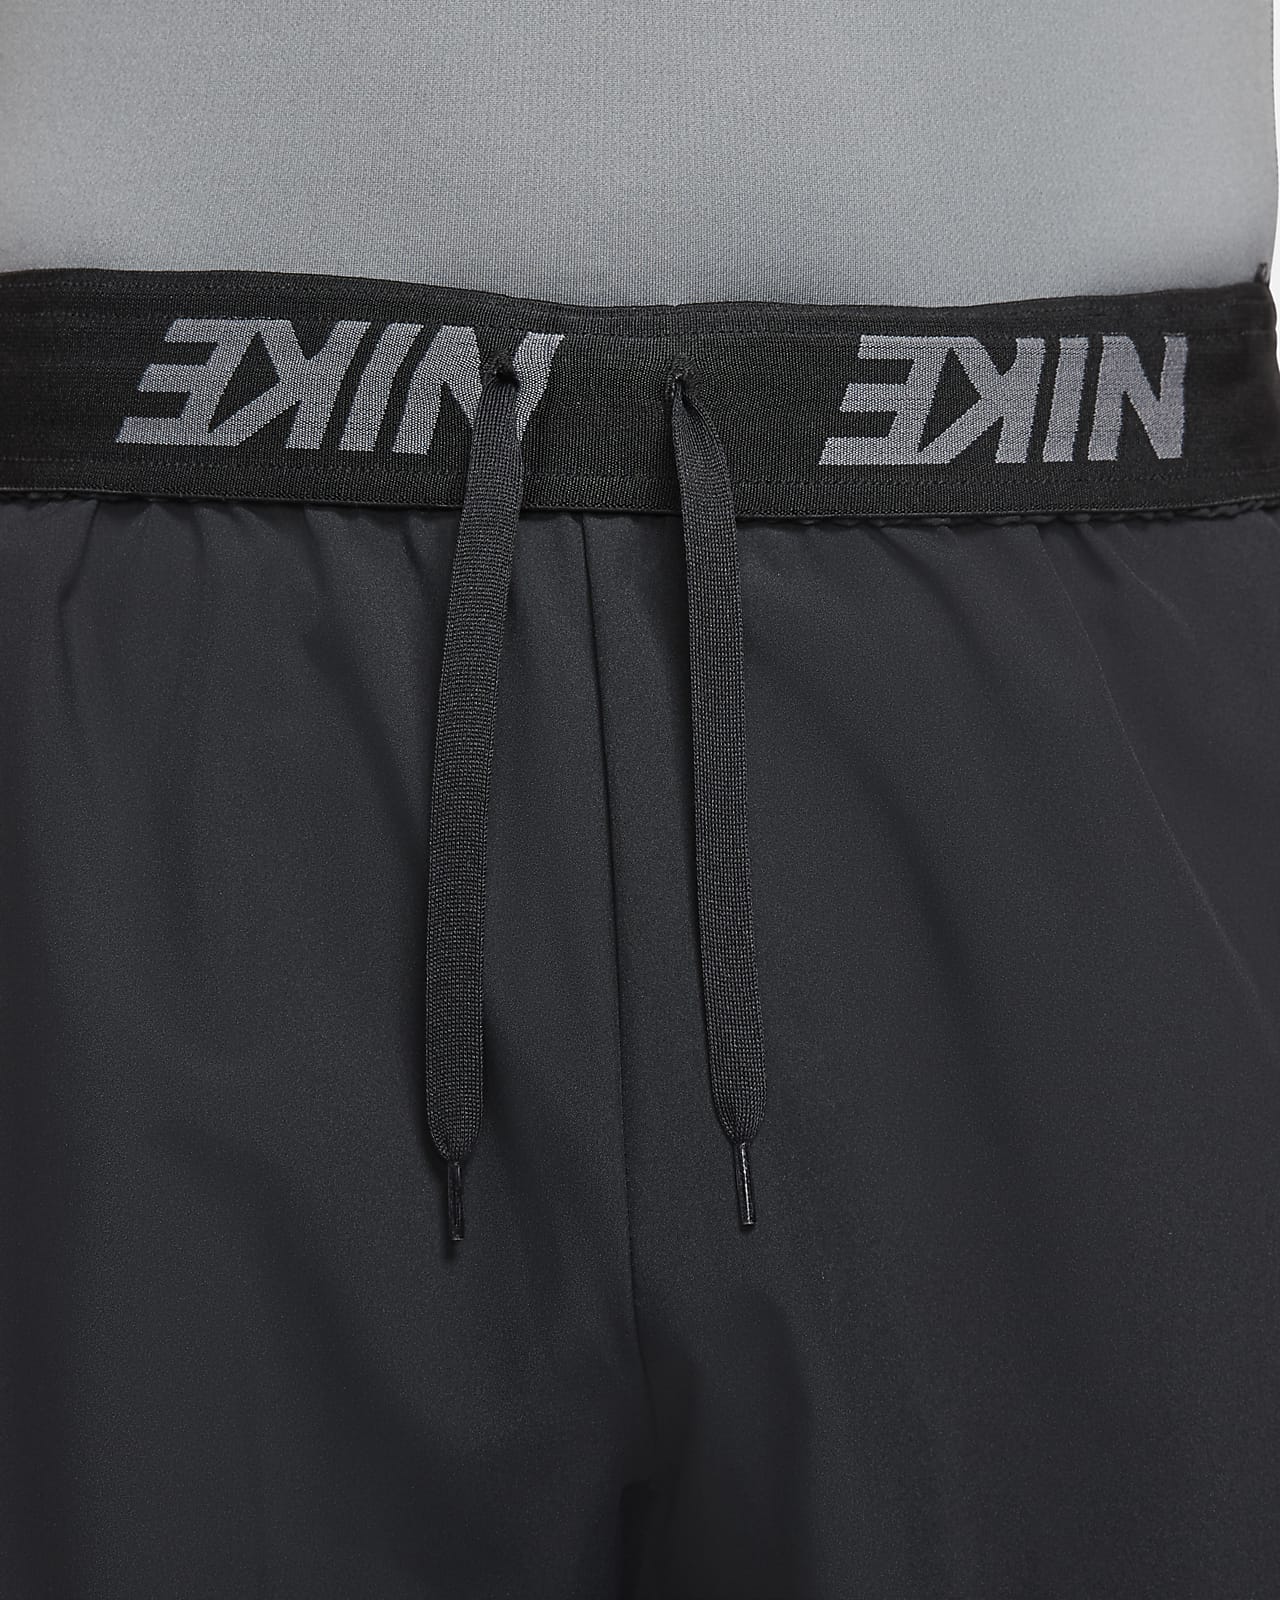 nike flex men's woven training shorts